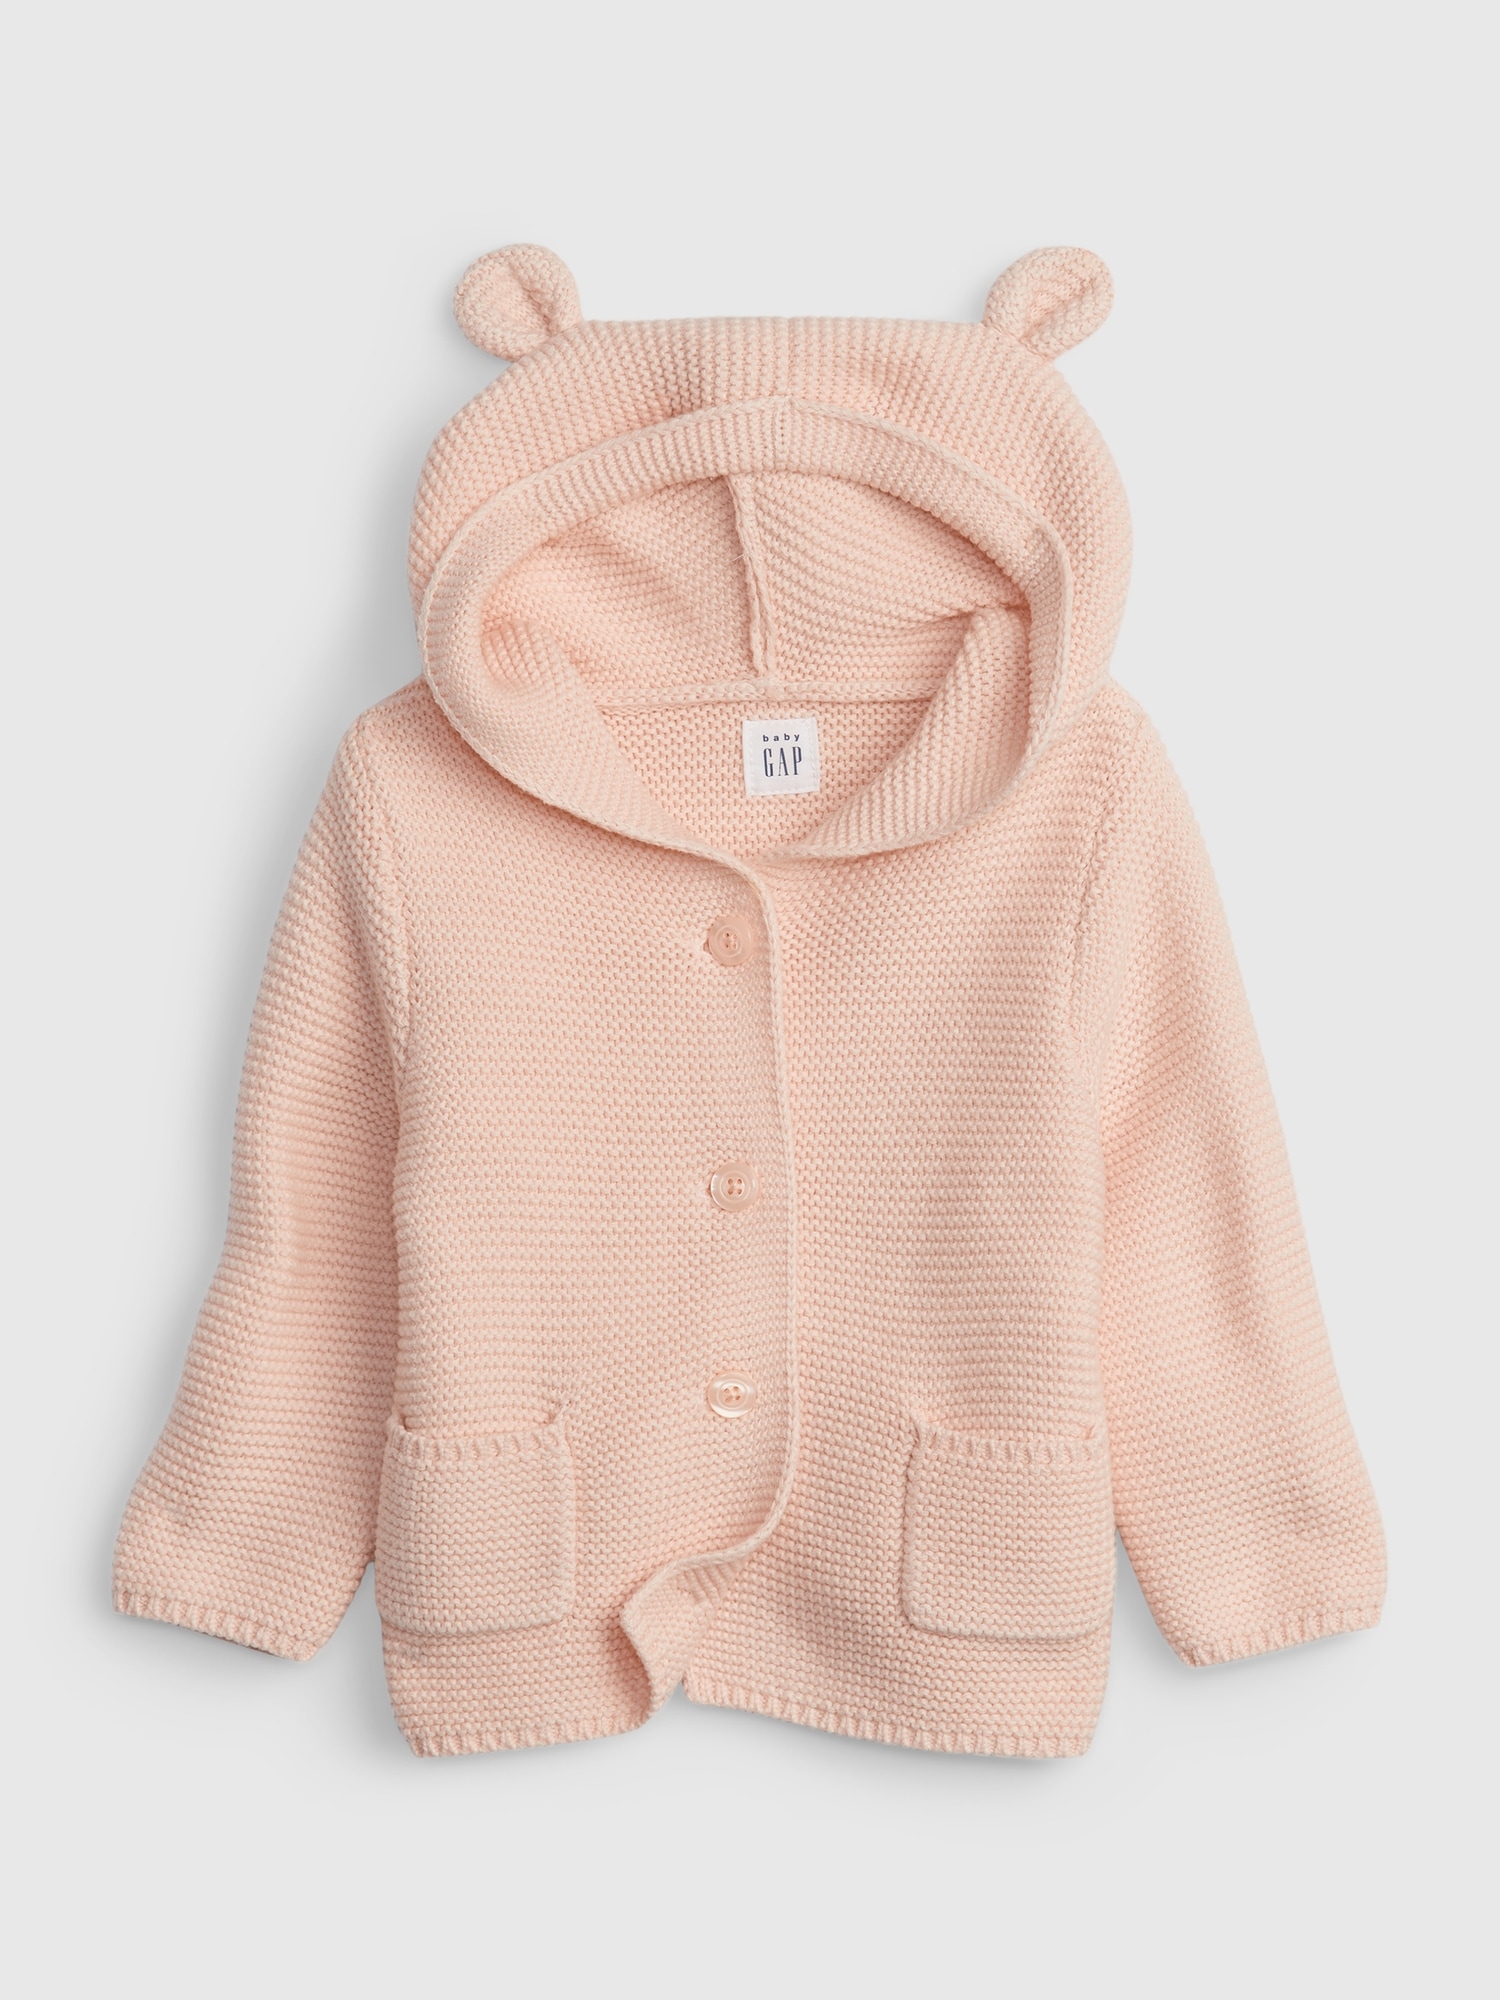 Gap Kids' Baby Brannan Bear Sweater In Milkshake Pink